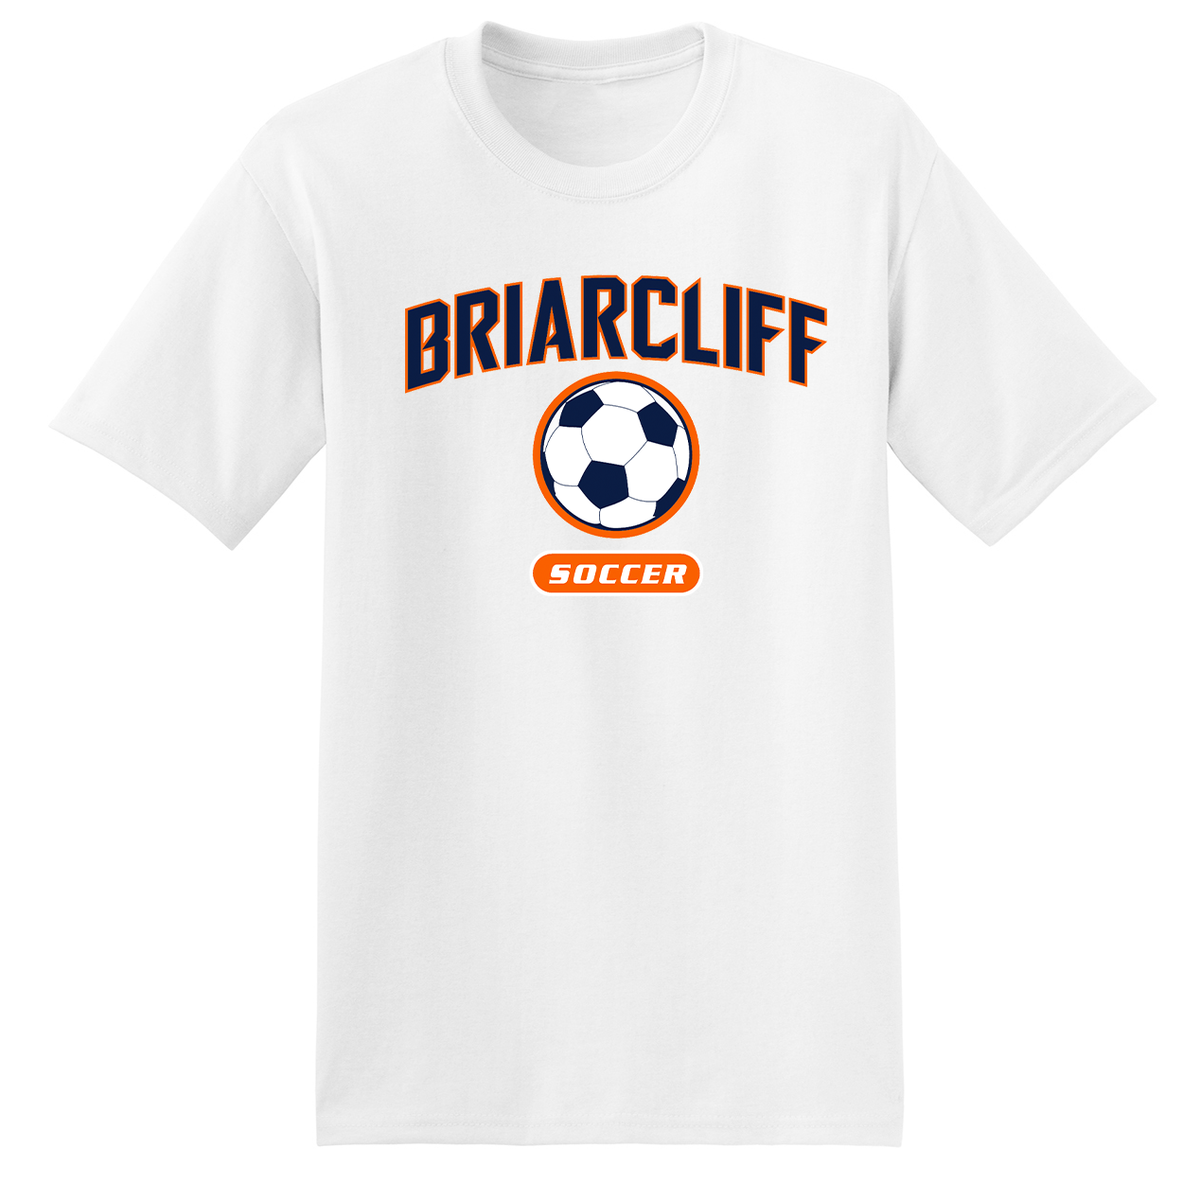 Briarcliff Soccer T-Shirt